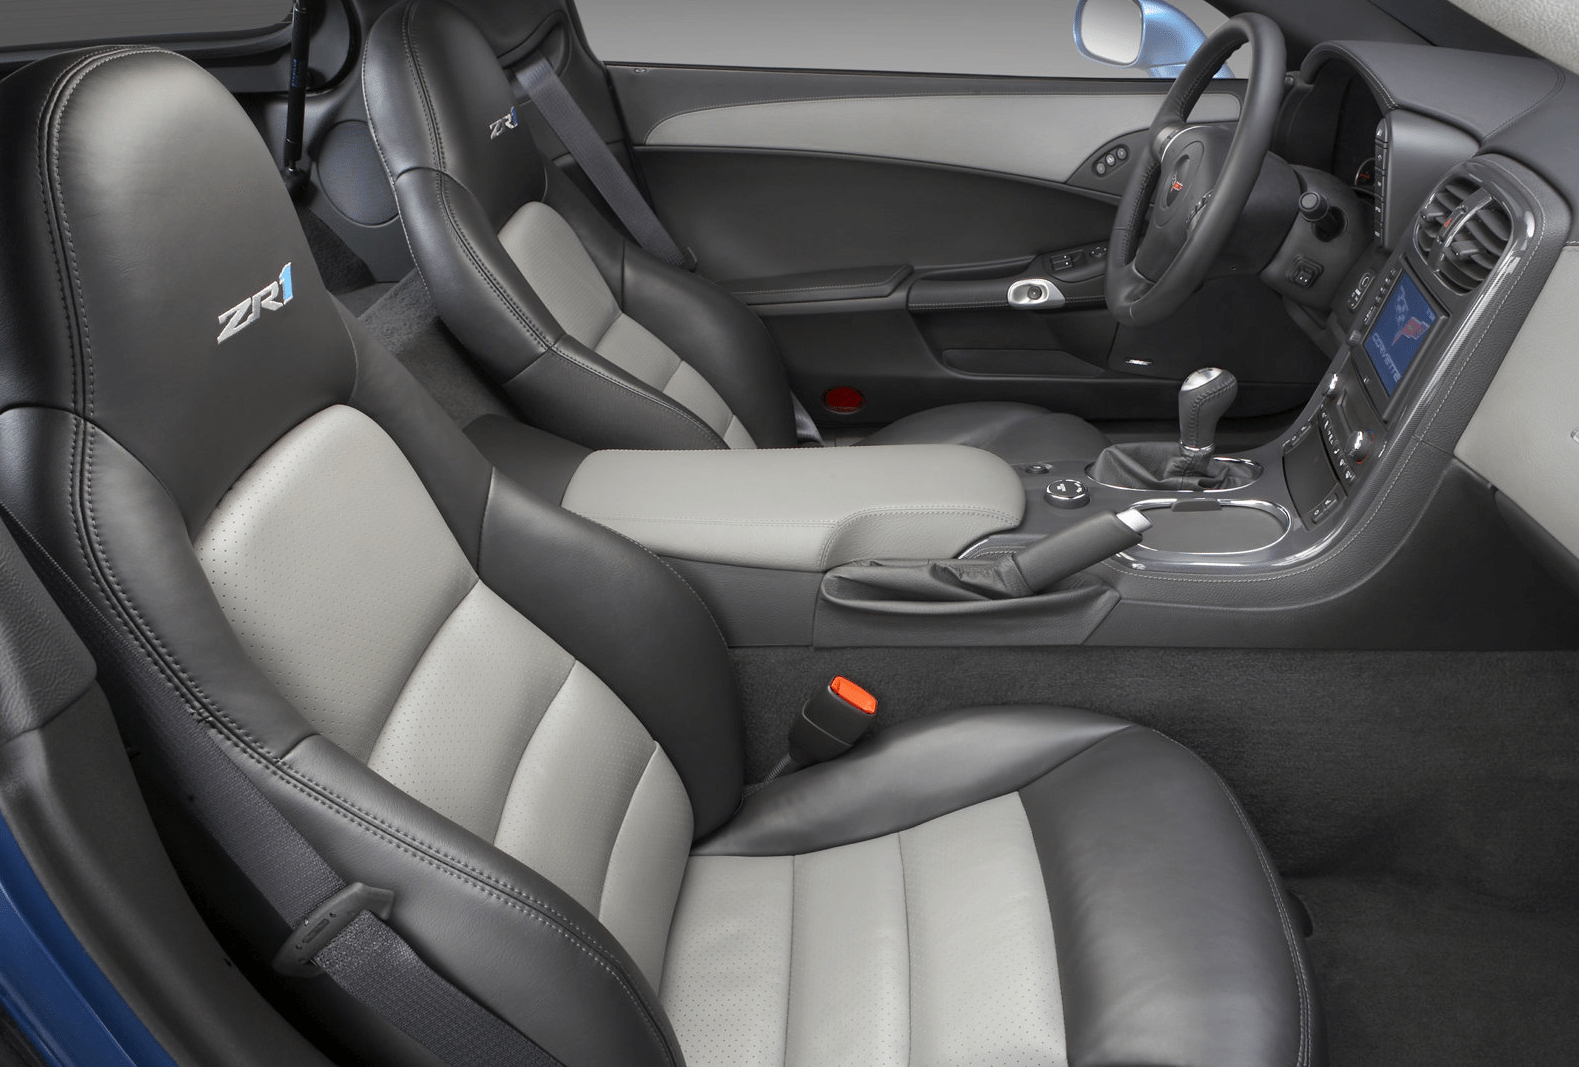 2009 Chevrolet Corvette Interior